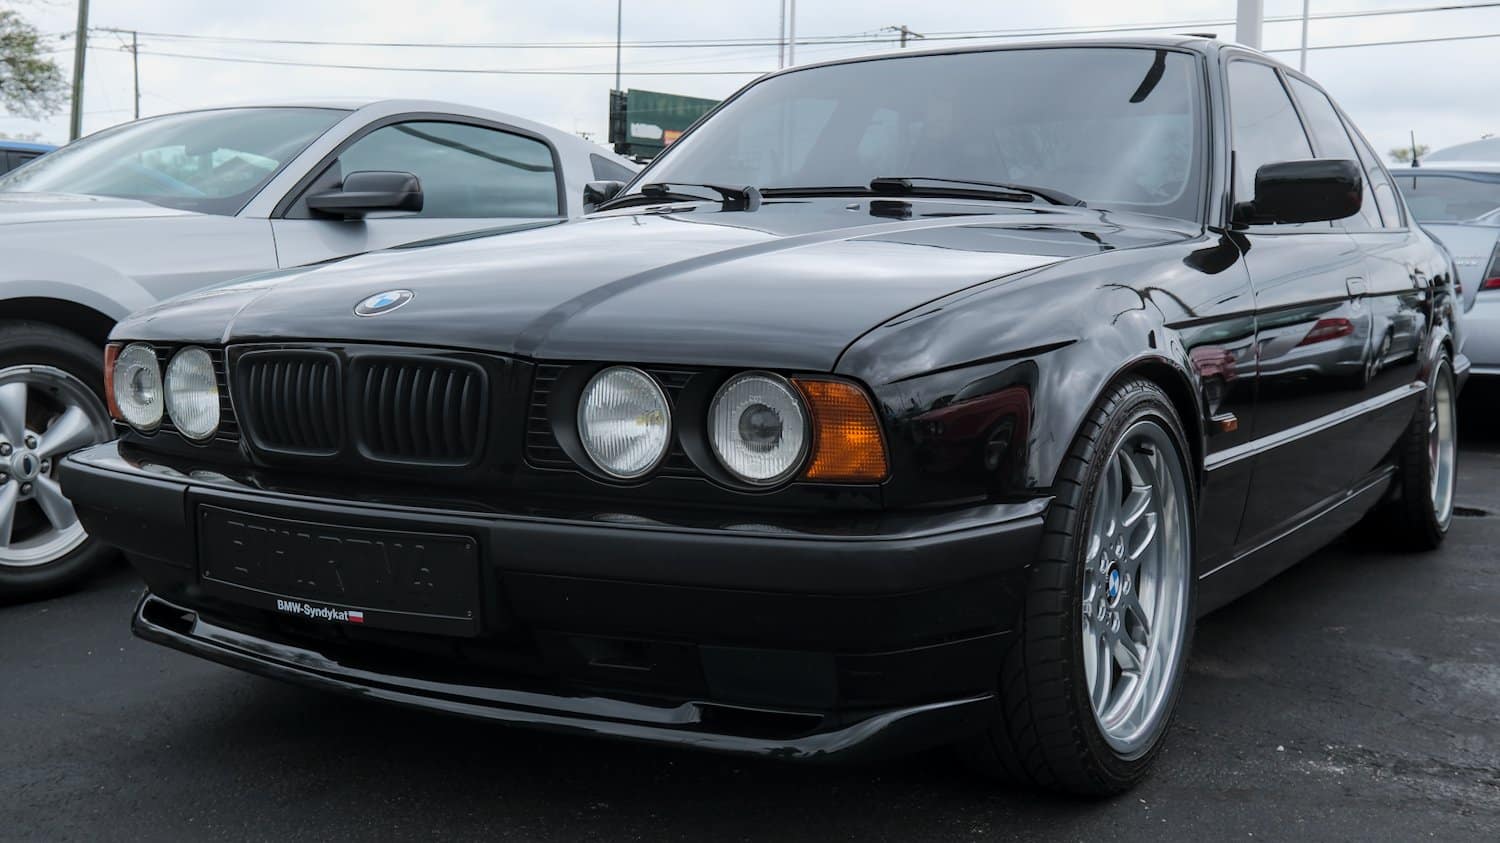 Gorgeous black BMW e34.